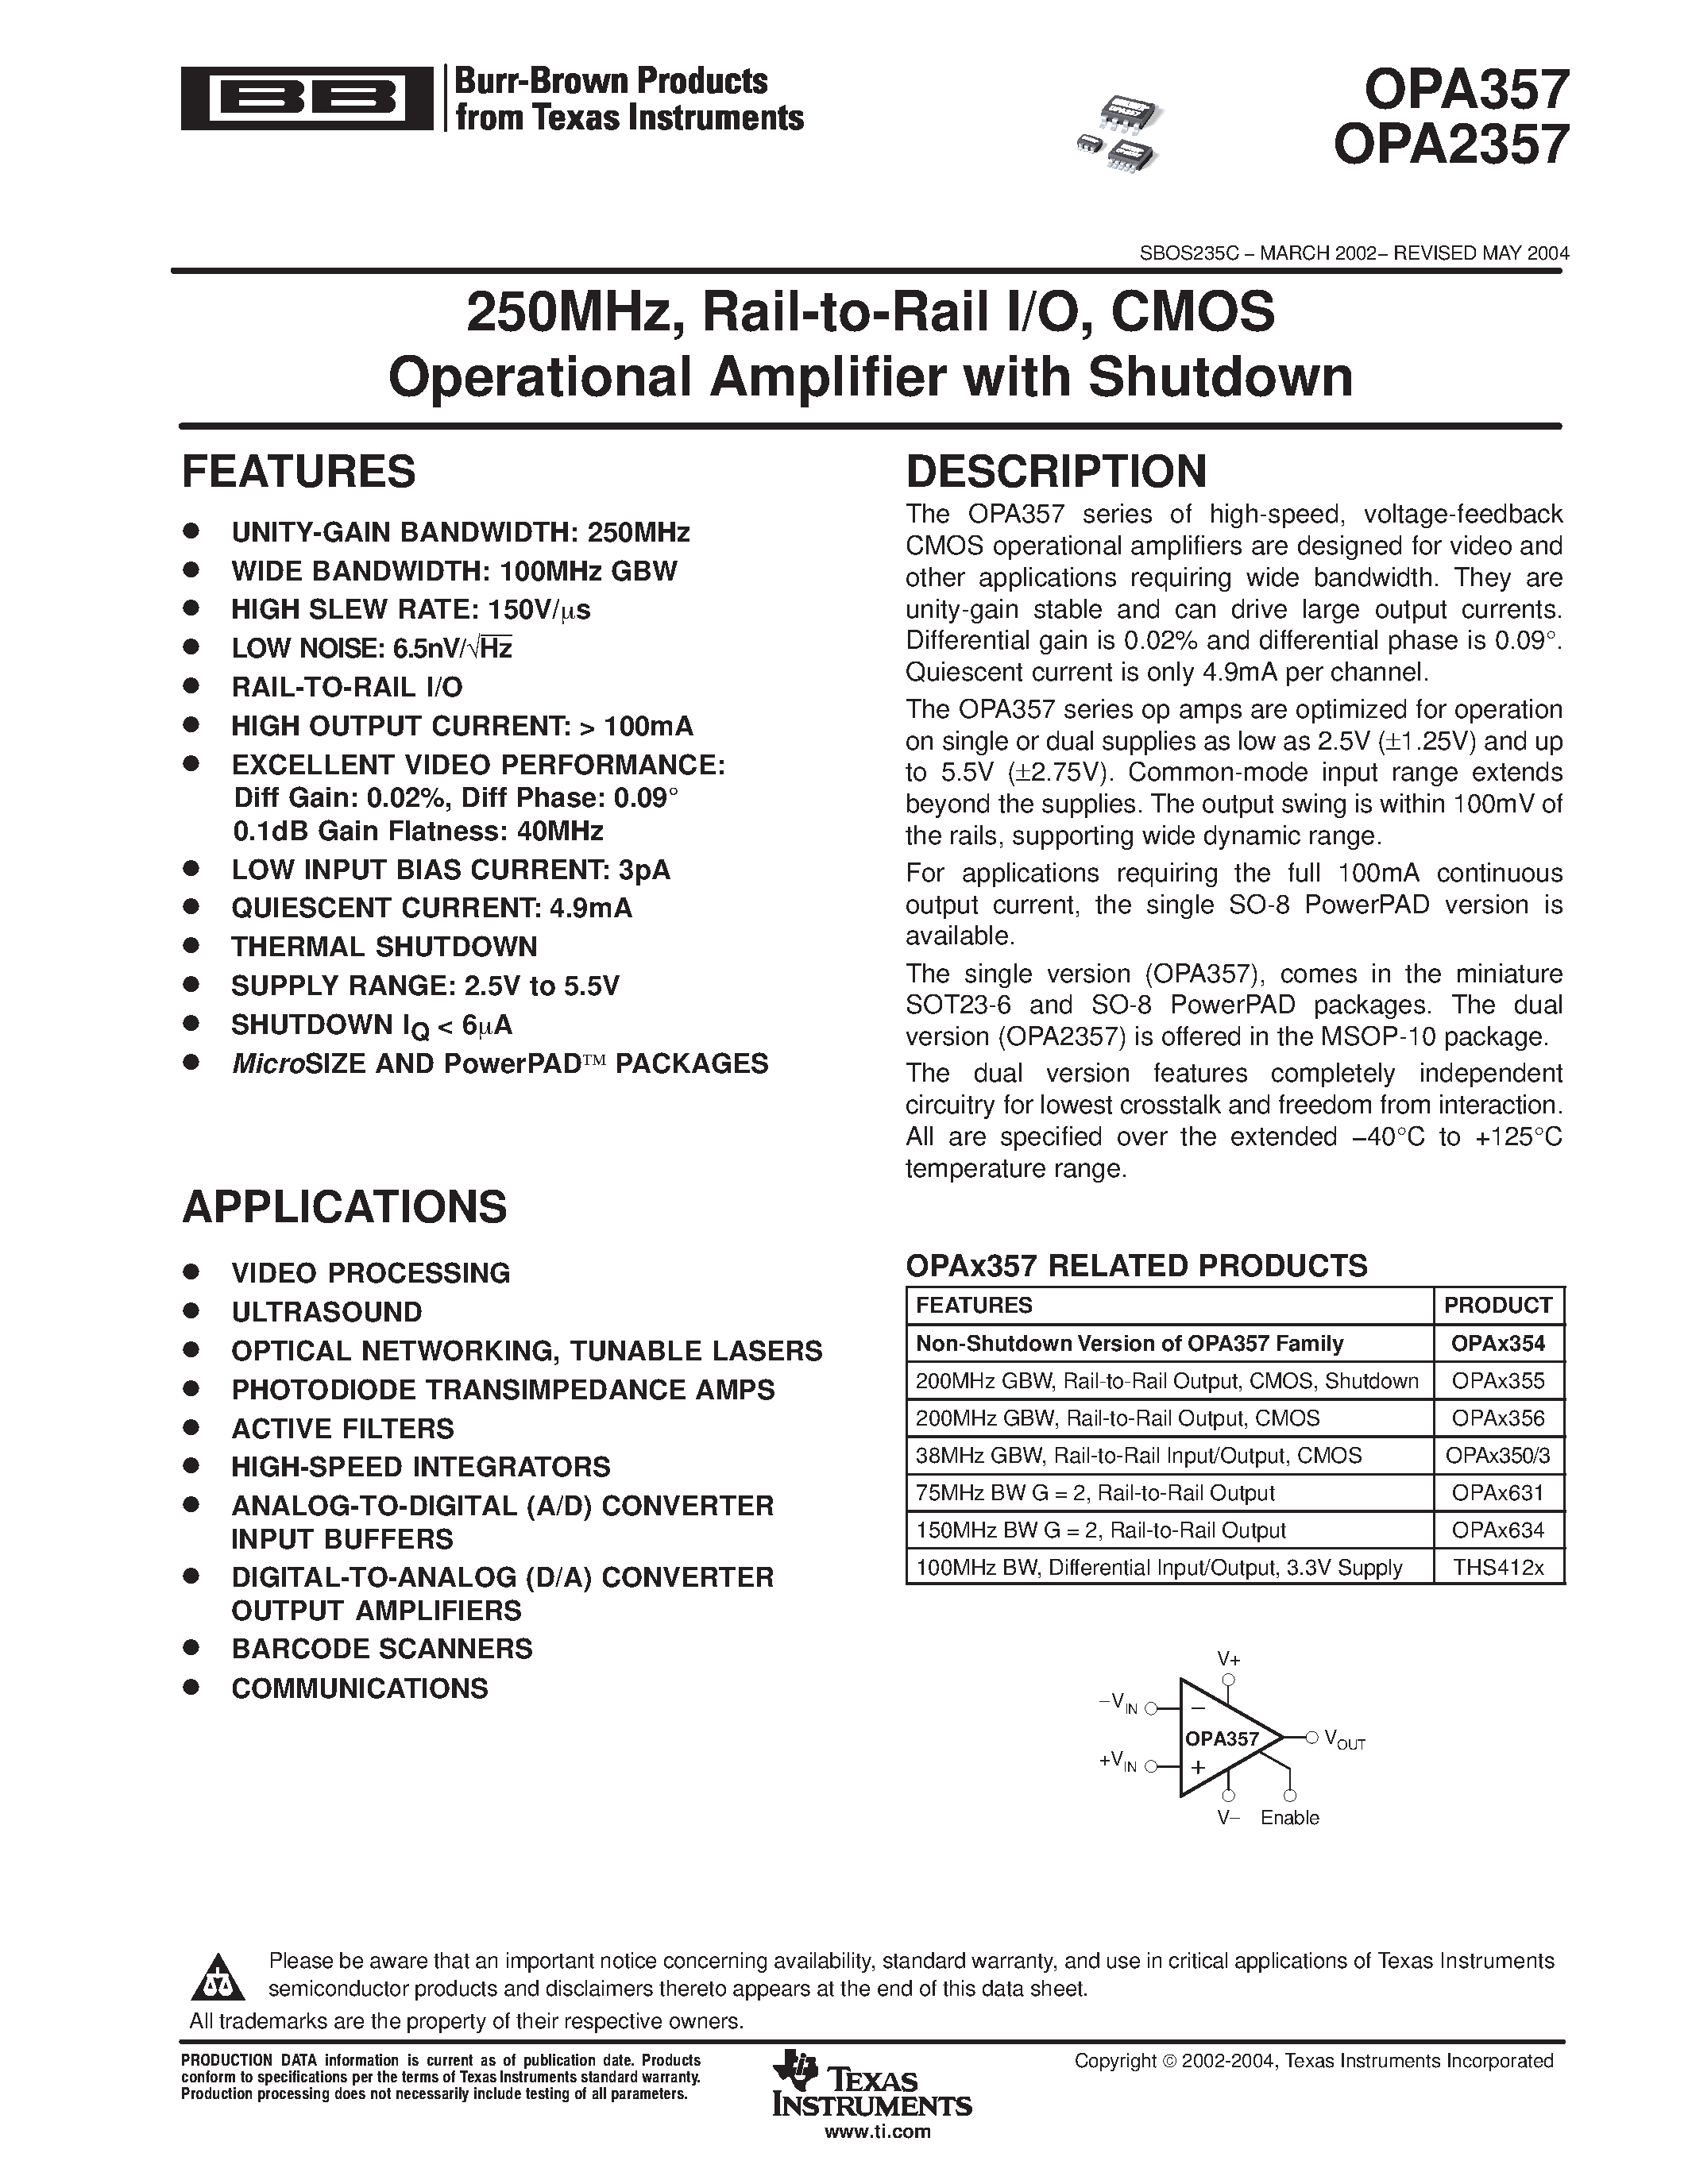 Datasheet OPA2357 - 250MHz / Rail-to-Rail I/O / CMOS Operational Amplifier with Shutdown page 1